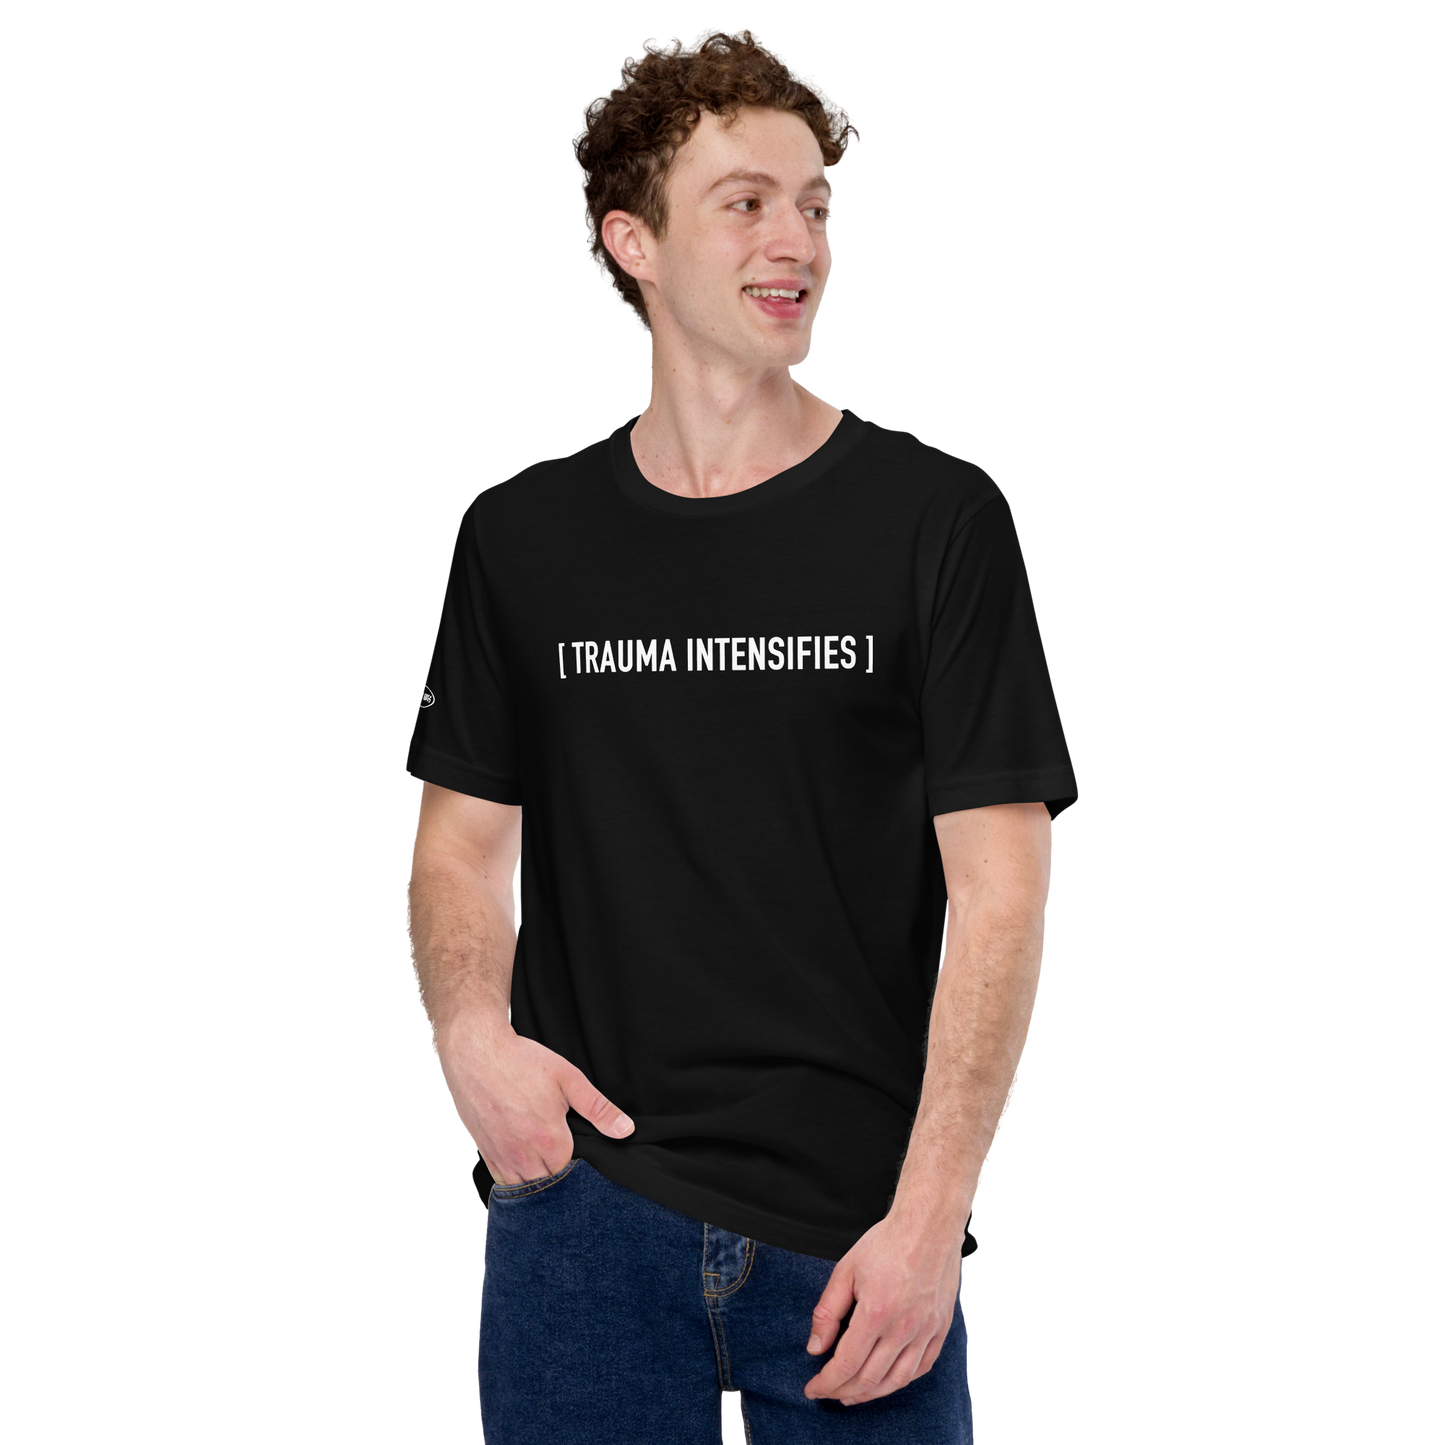 SUBTITLE - [Trauma Intensifies] - Funny T-Shirt